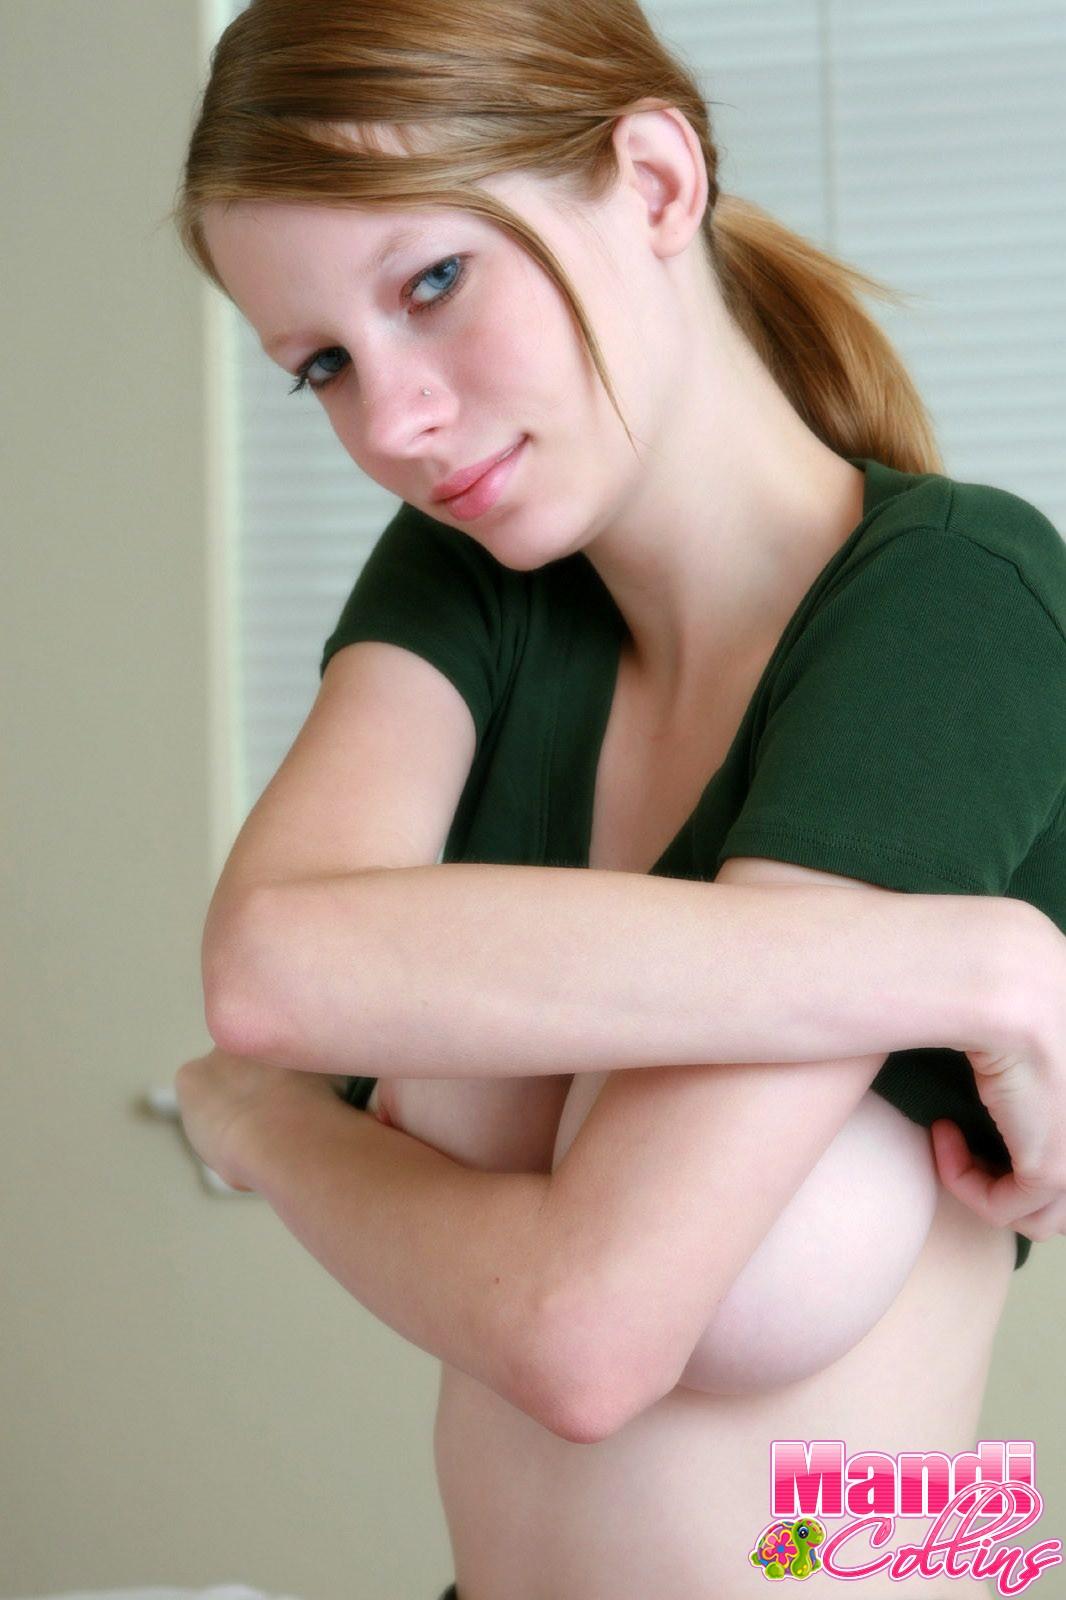 Pictures of teen model Mandi Collins exposing her big tits in bed #59196649